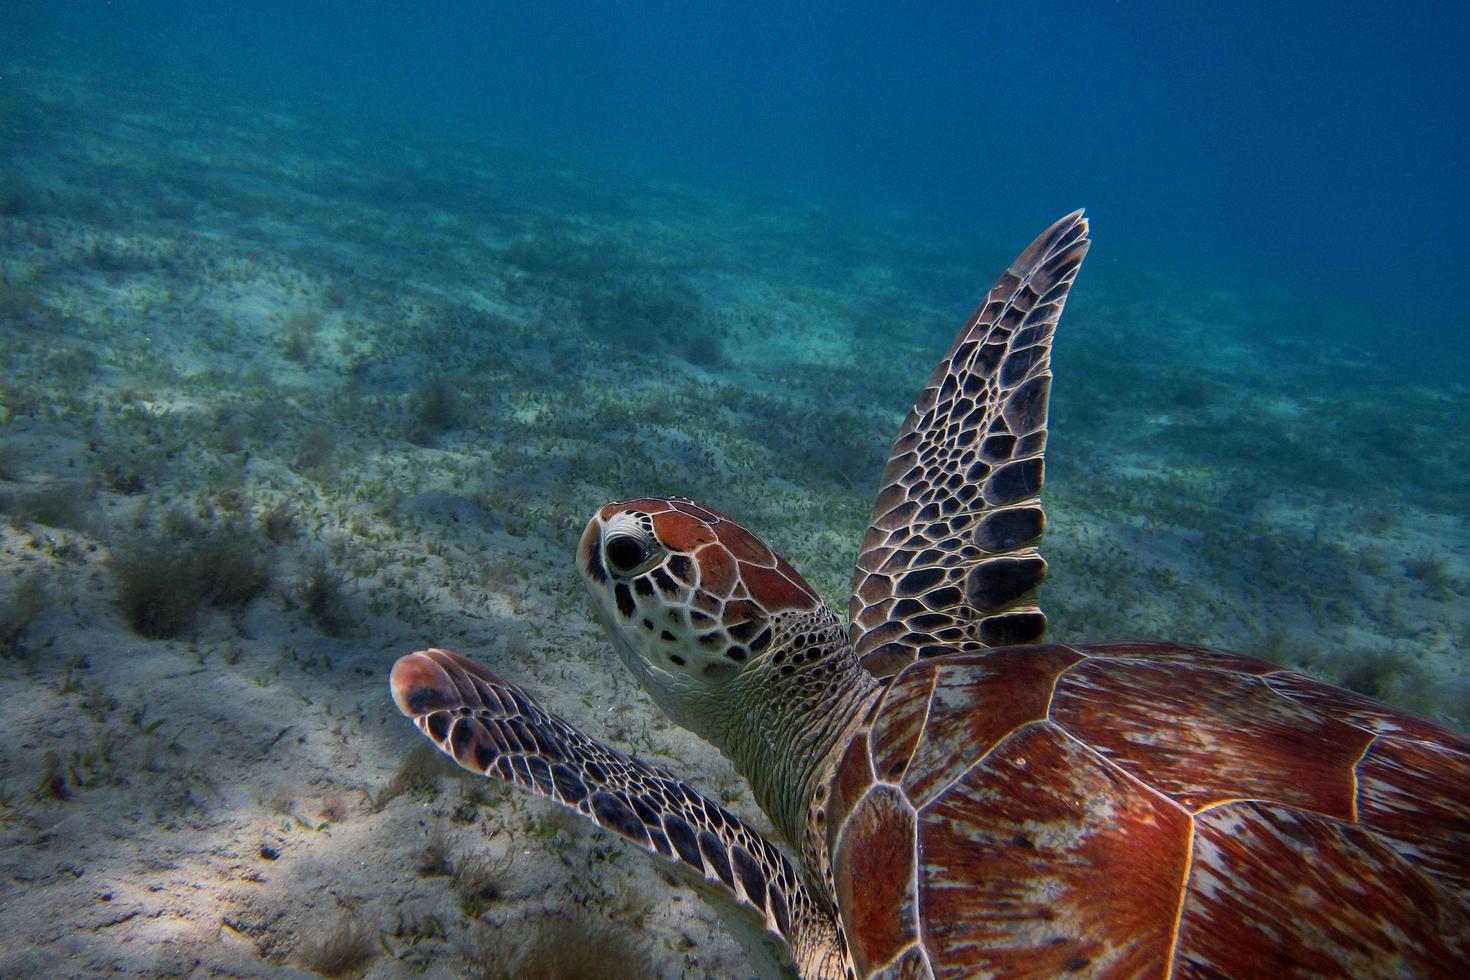 tartaruga marinha no mar azul foto